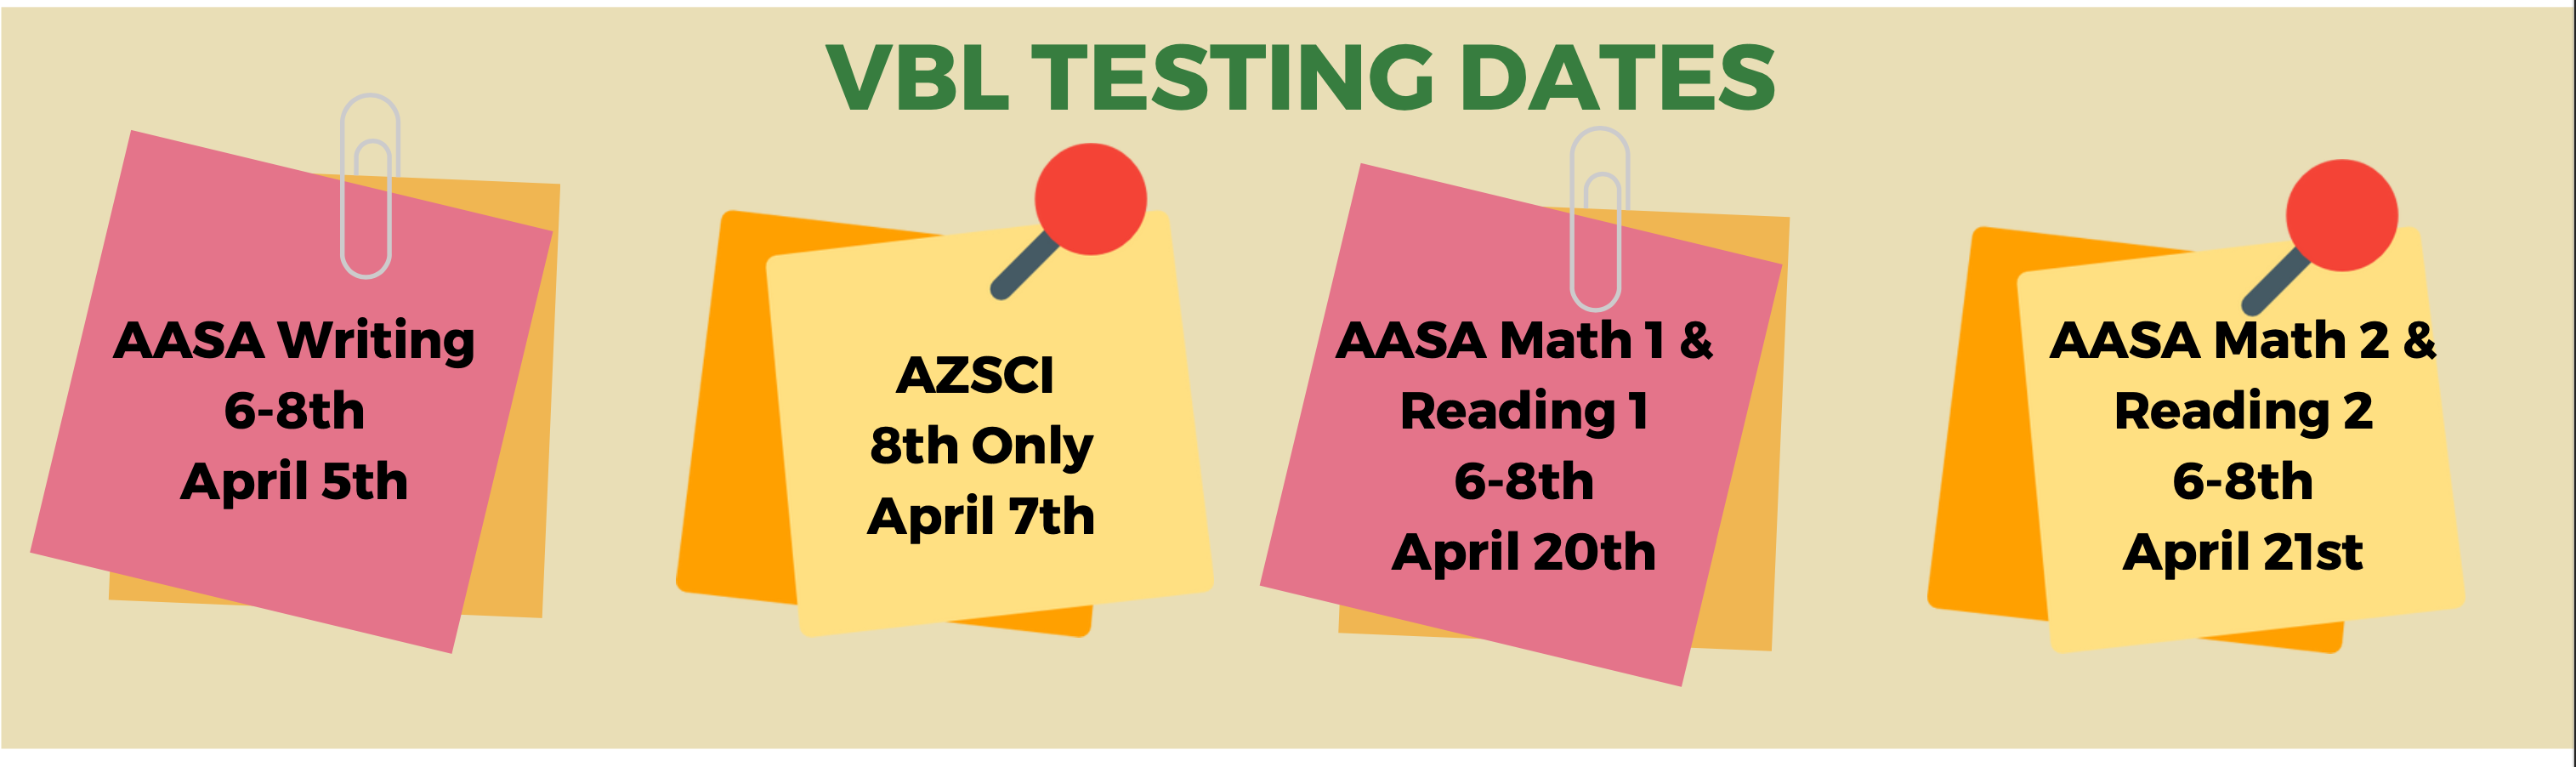 VBL Testing Dates